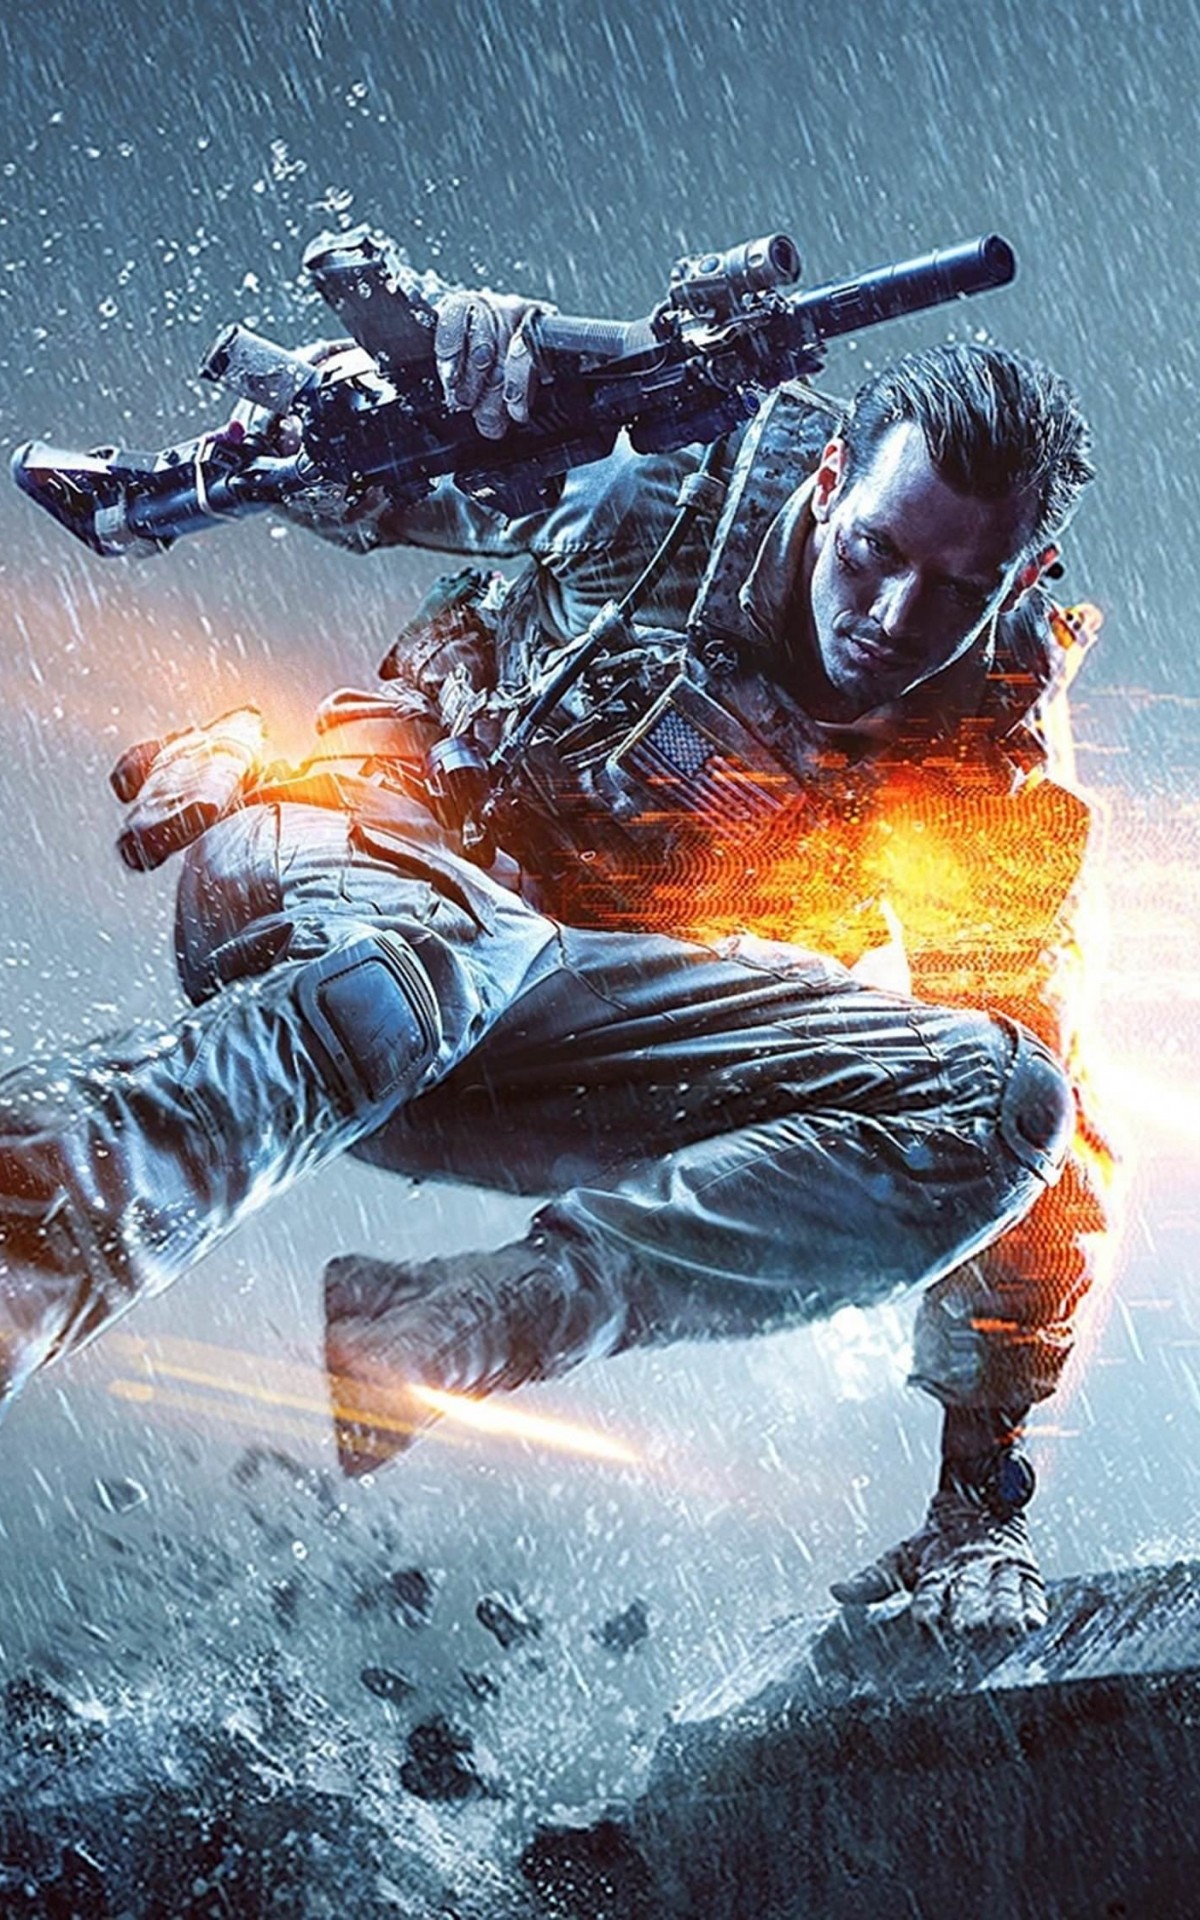 Battlefield Soldier Wallpaper for Amazon Kindle Fire HDX